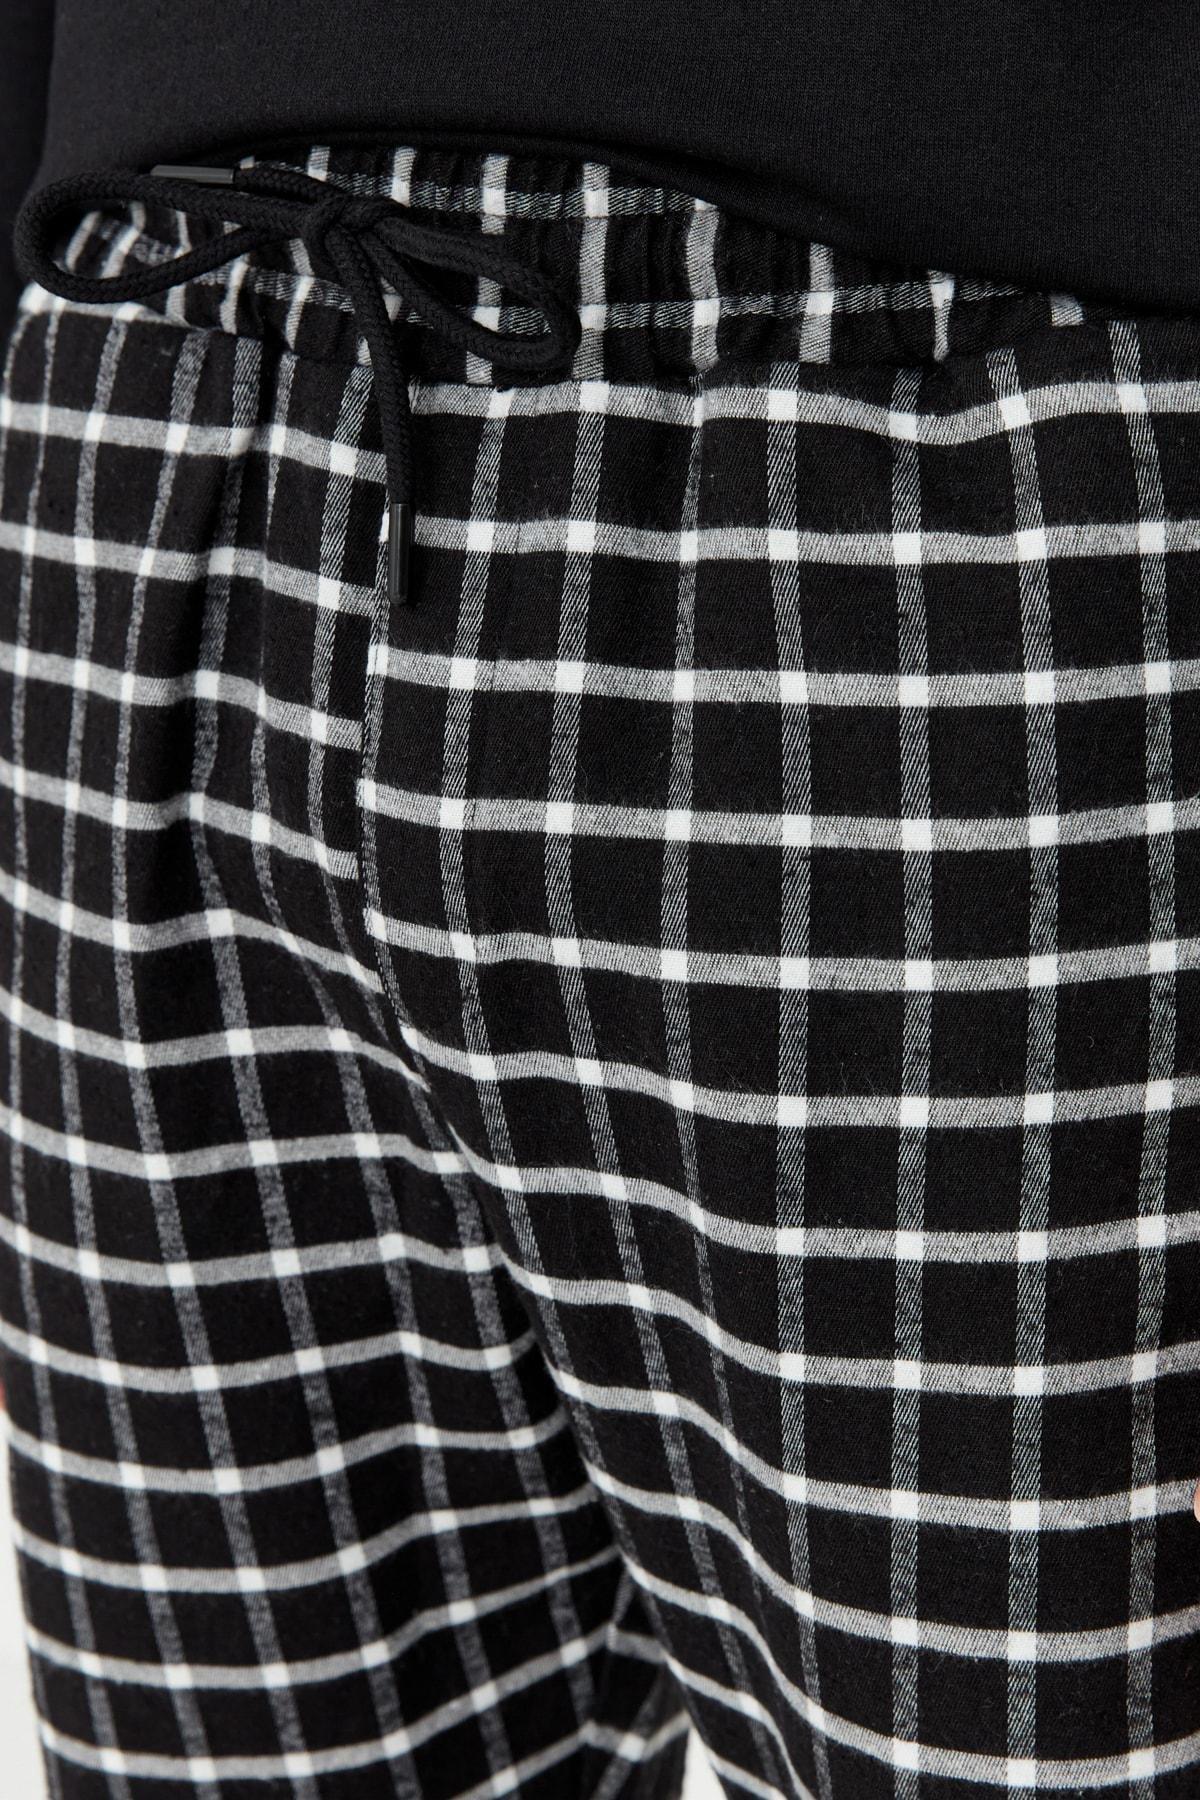 Trendyol - Black Plain Pajama Set